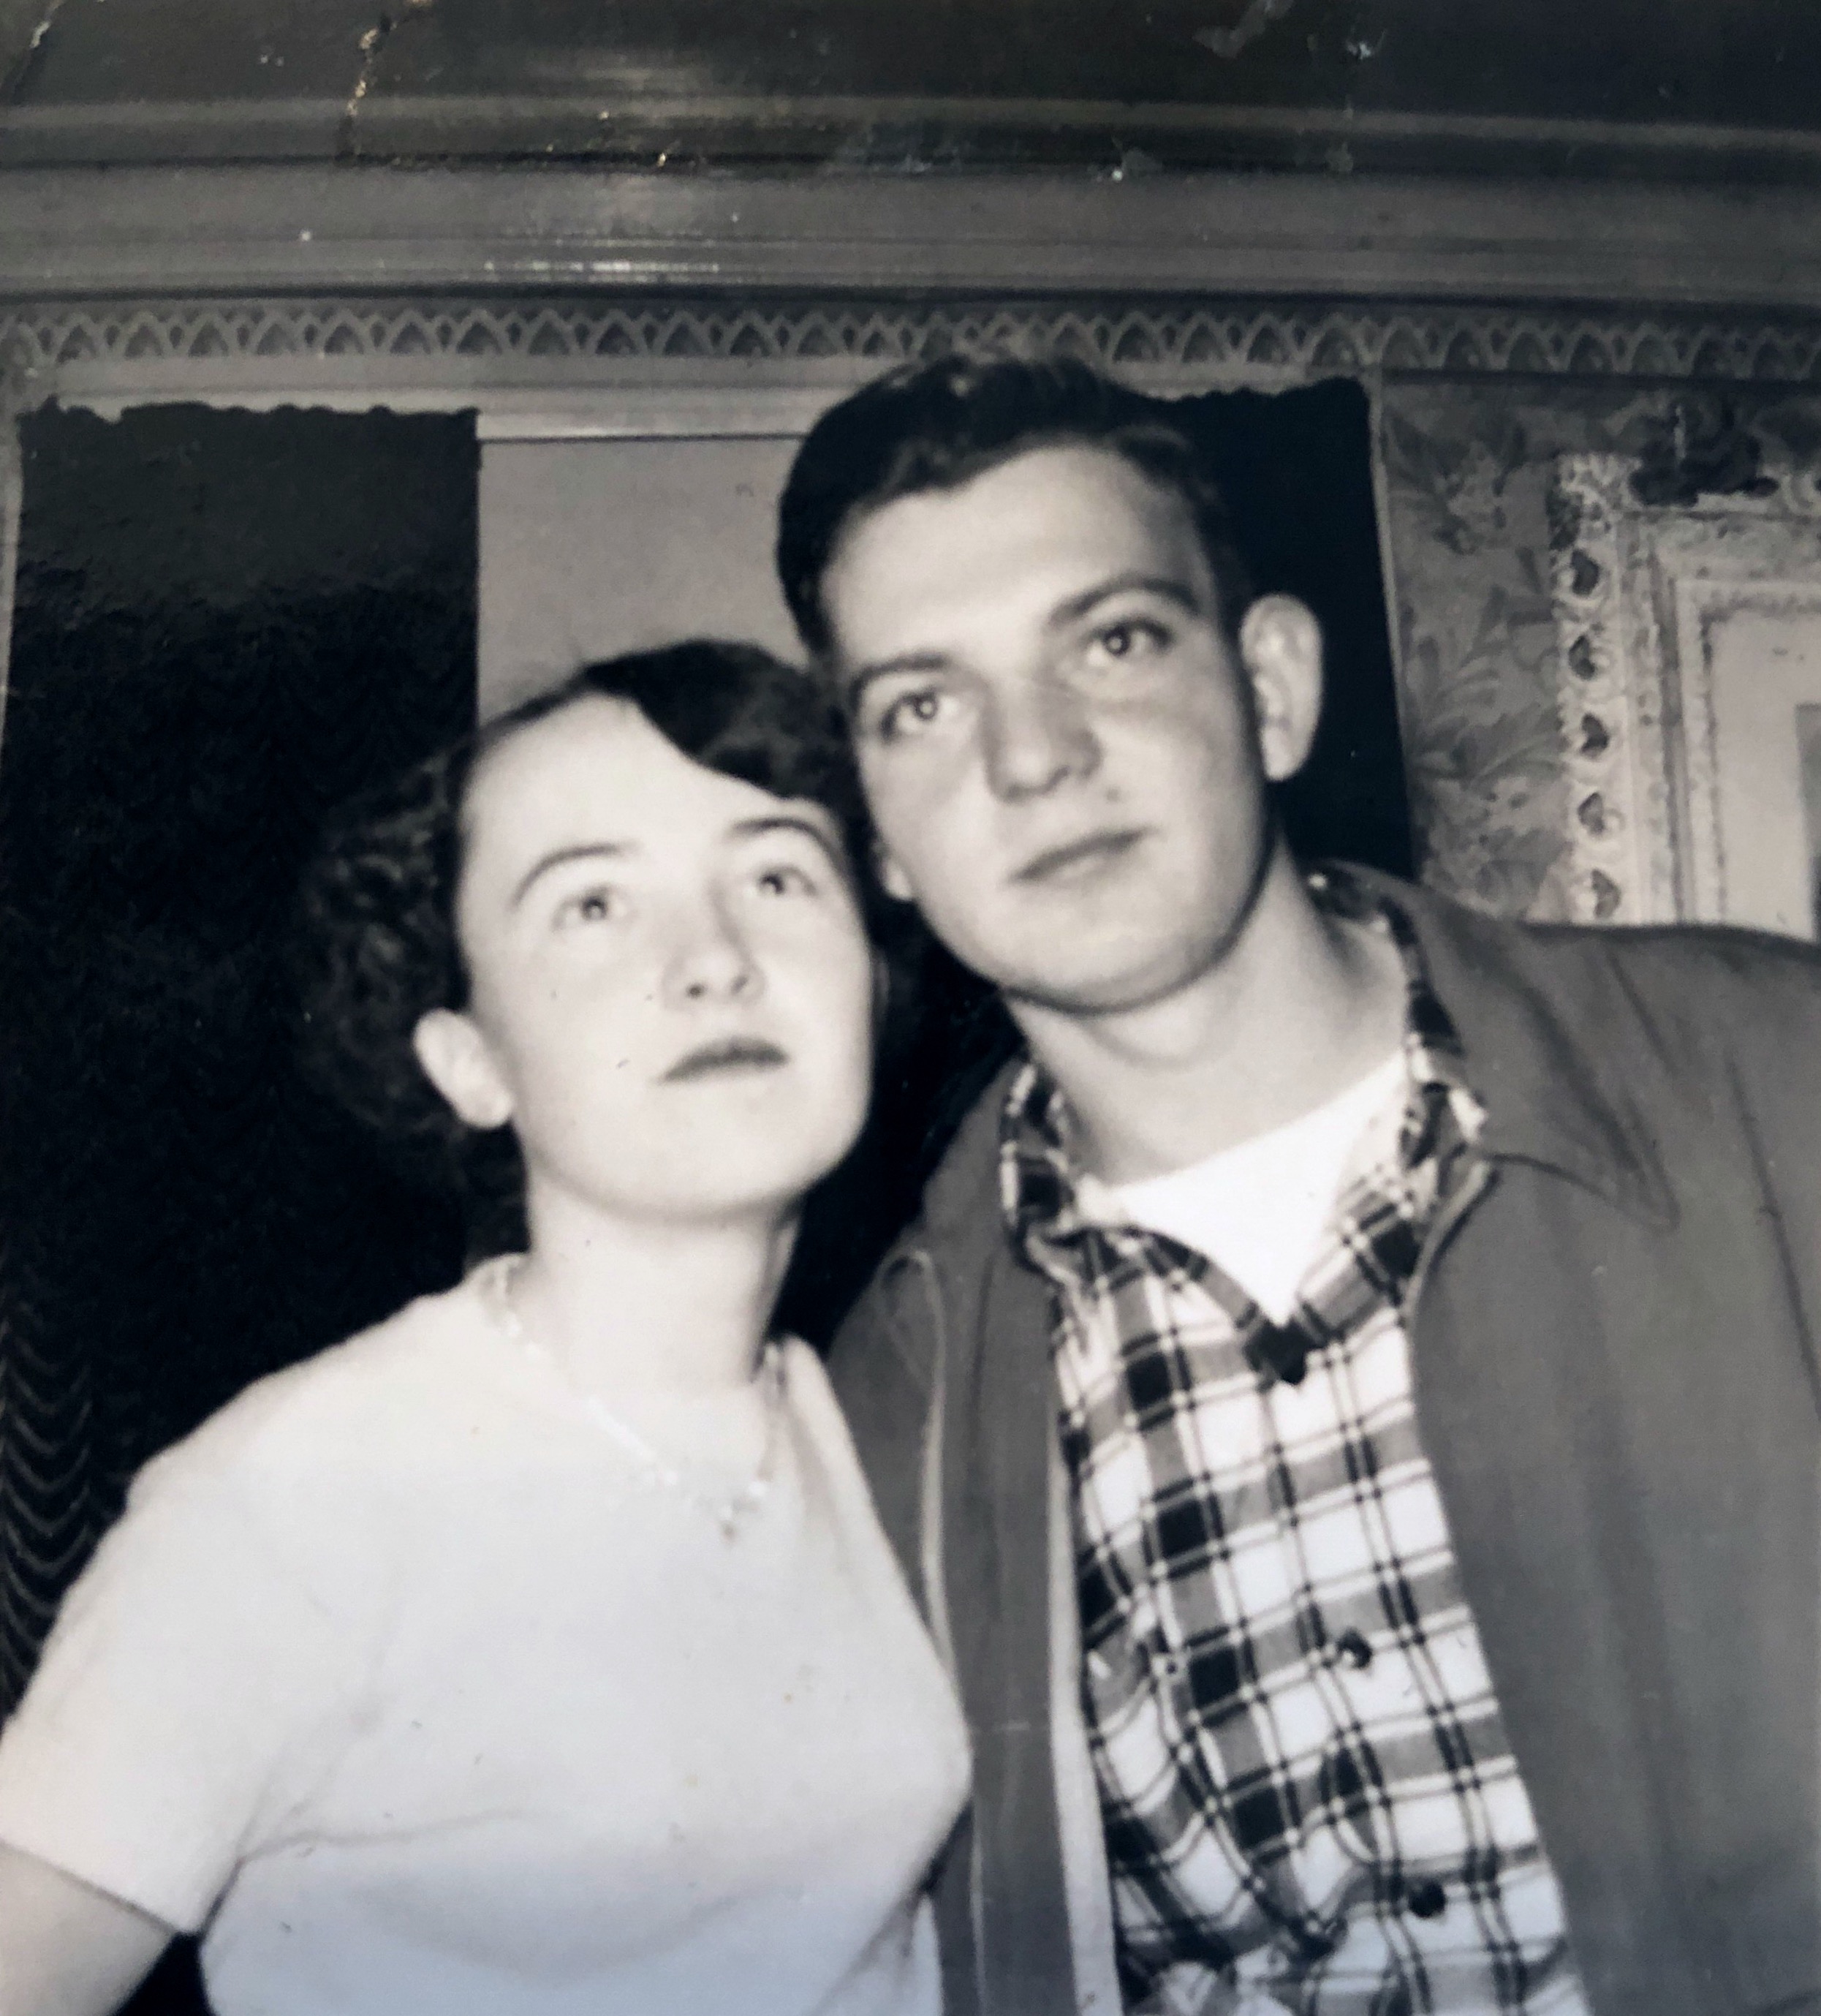 Grandma & Grandpa, c. 1950s